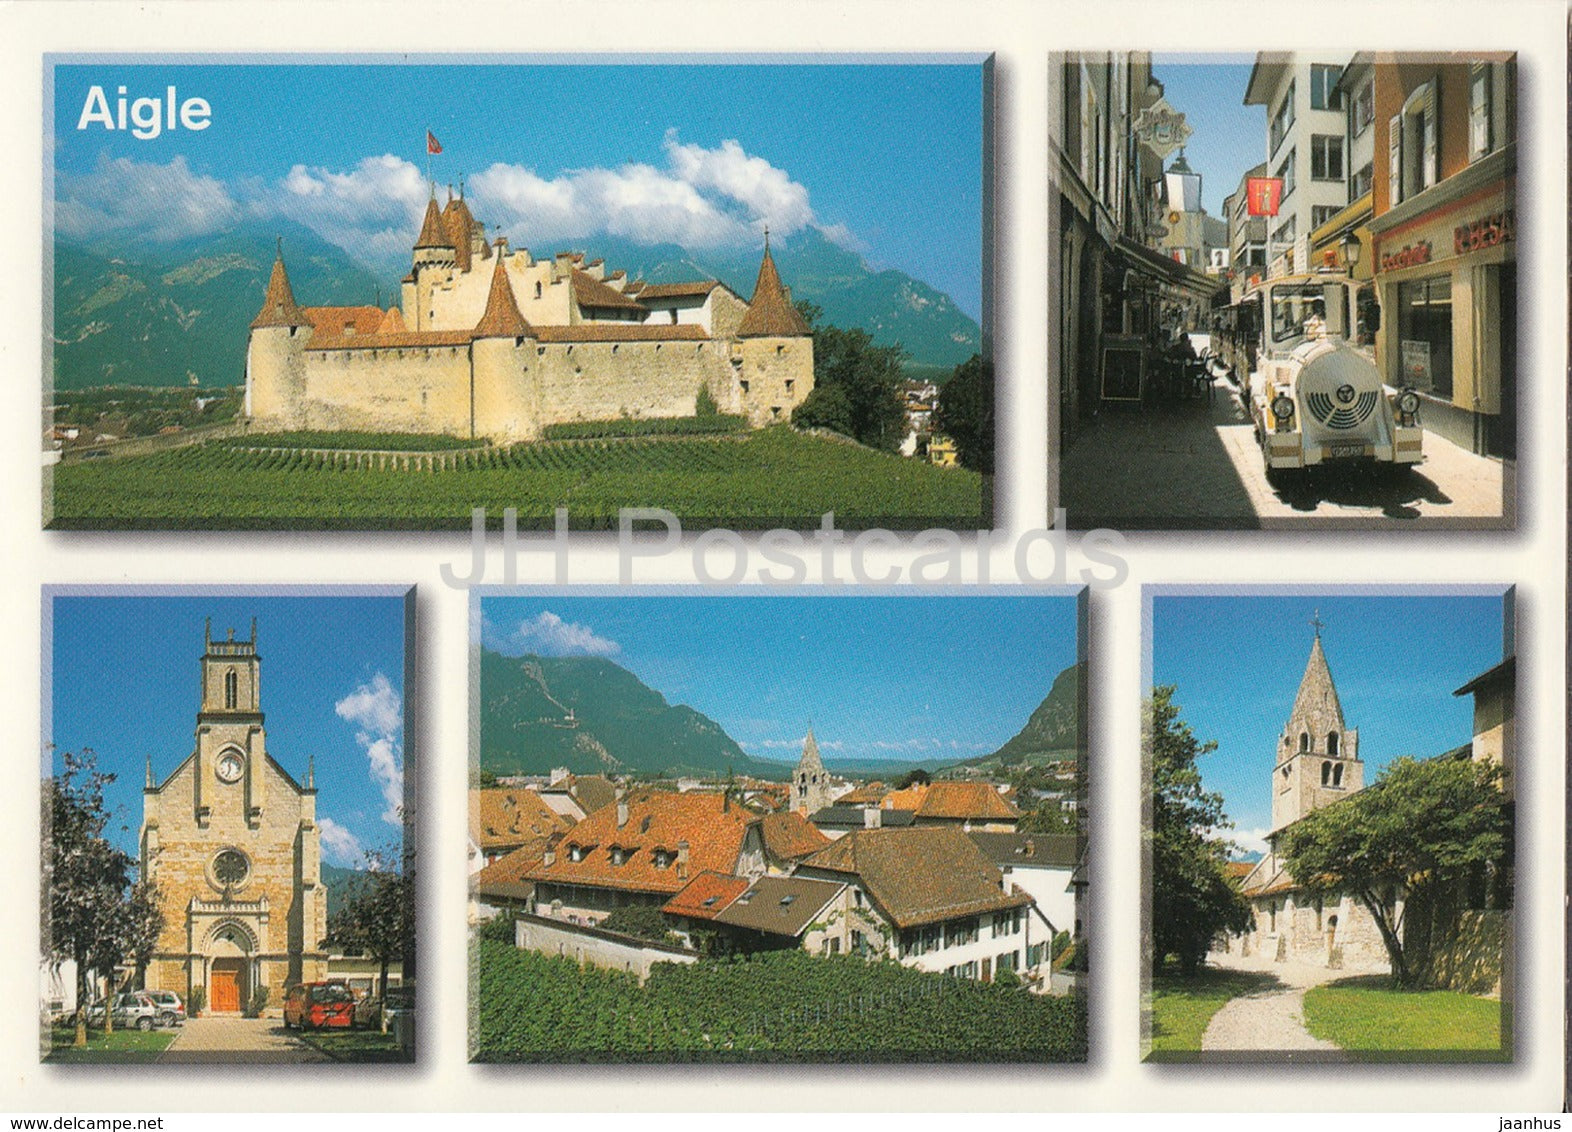 Aigle - castle - church - 23557 - Switzerland - unused - JH Postcards